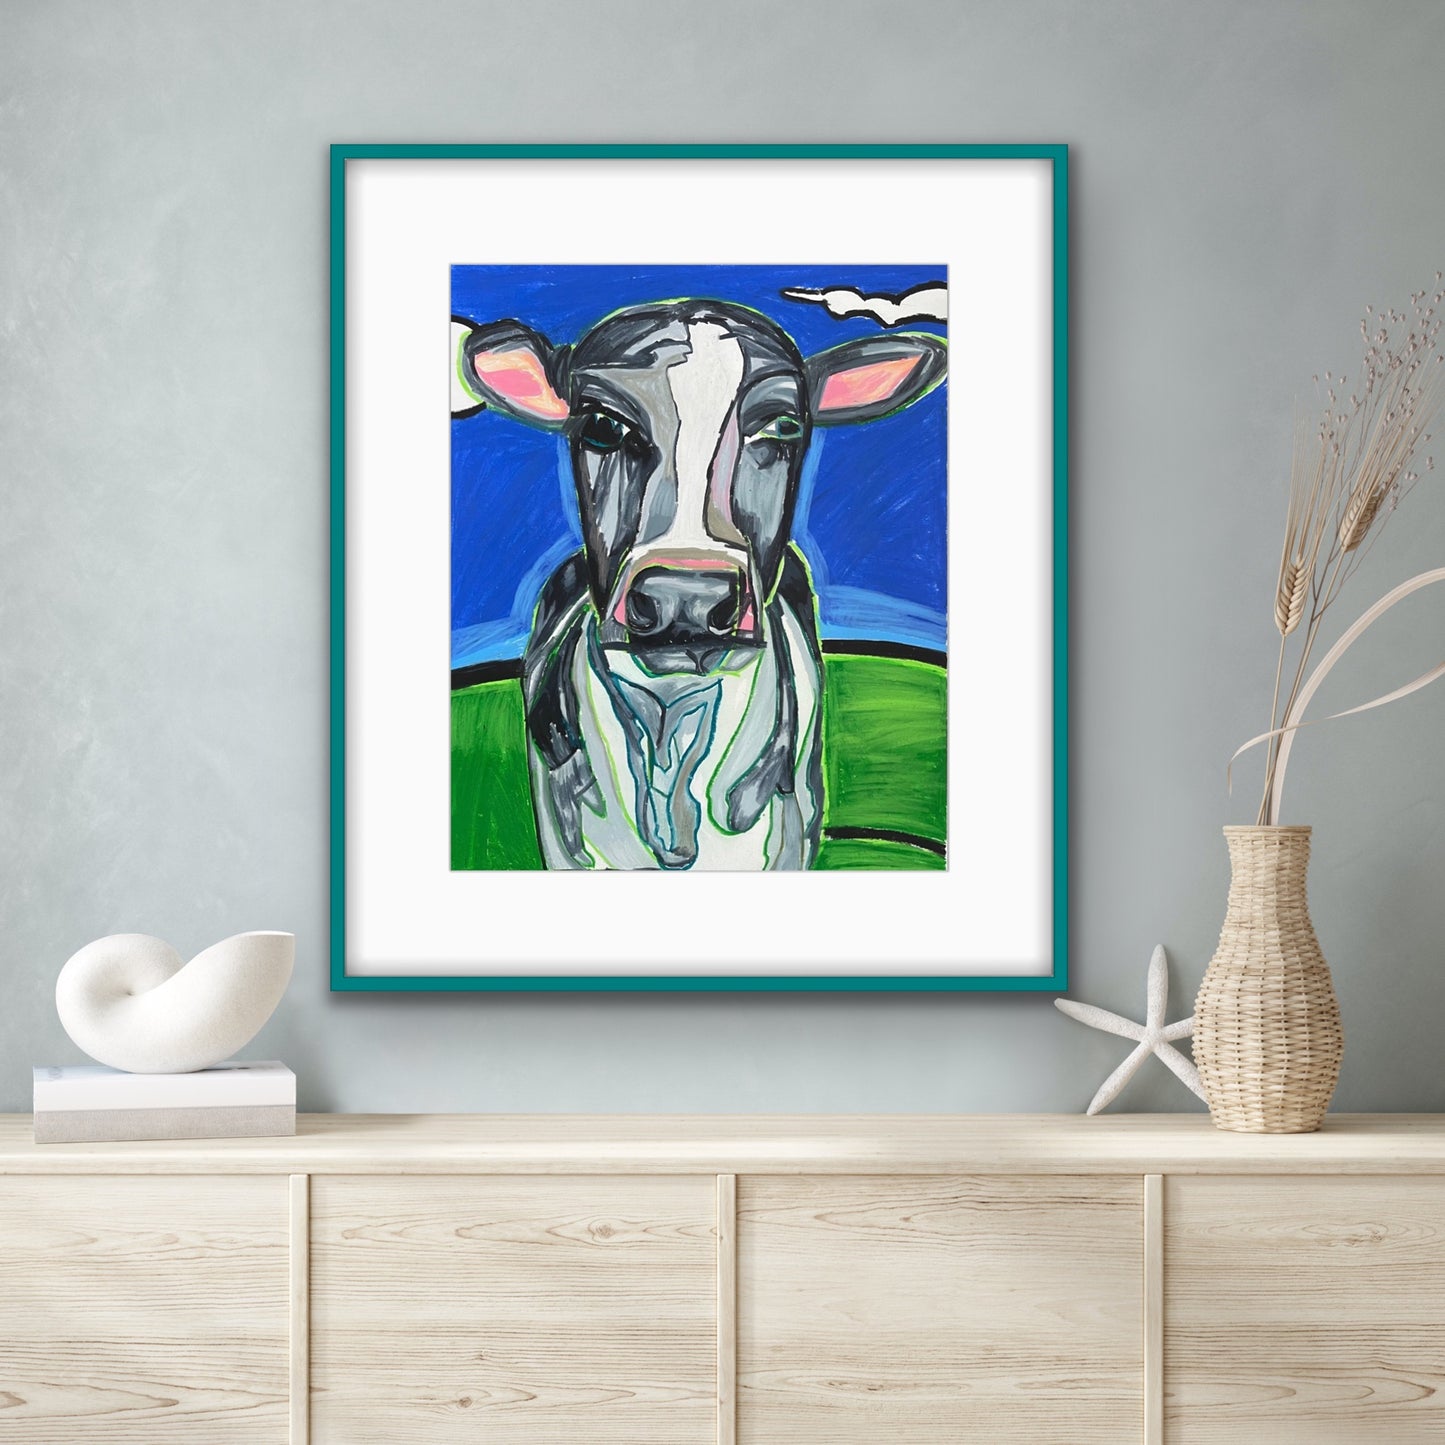 My Cow - ORIGINAL 14x17”